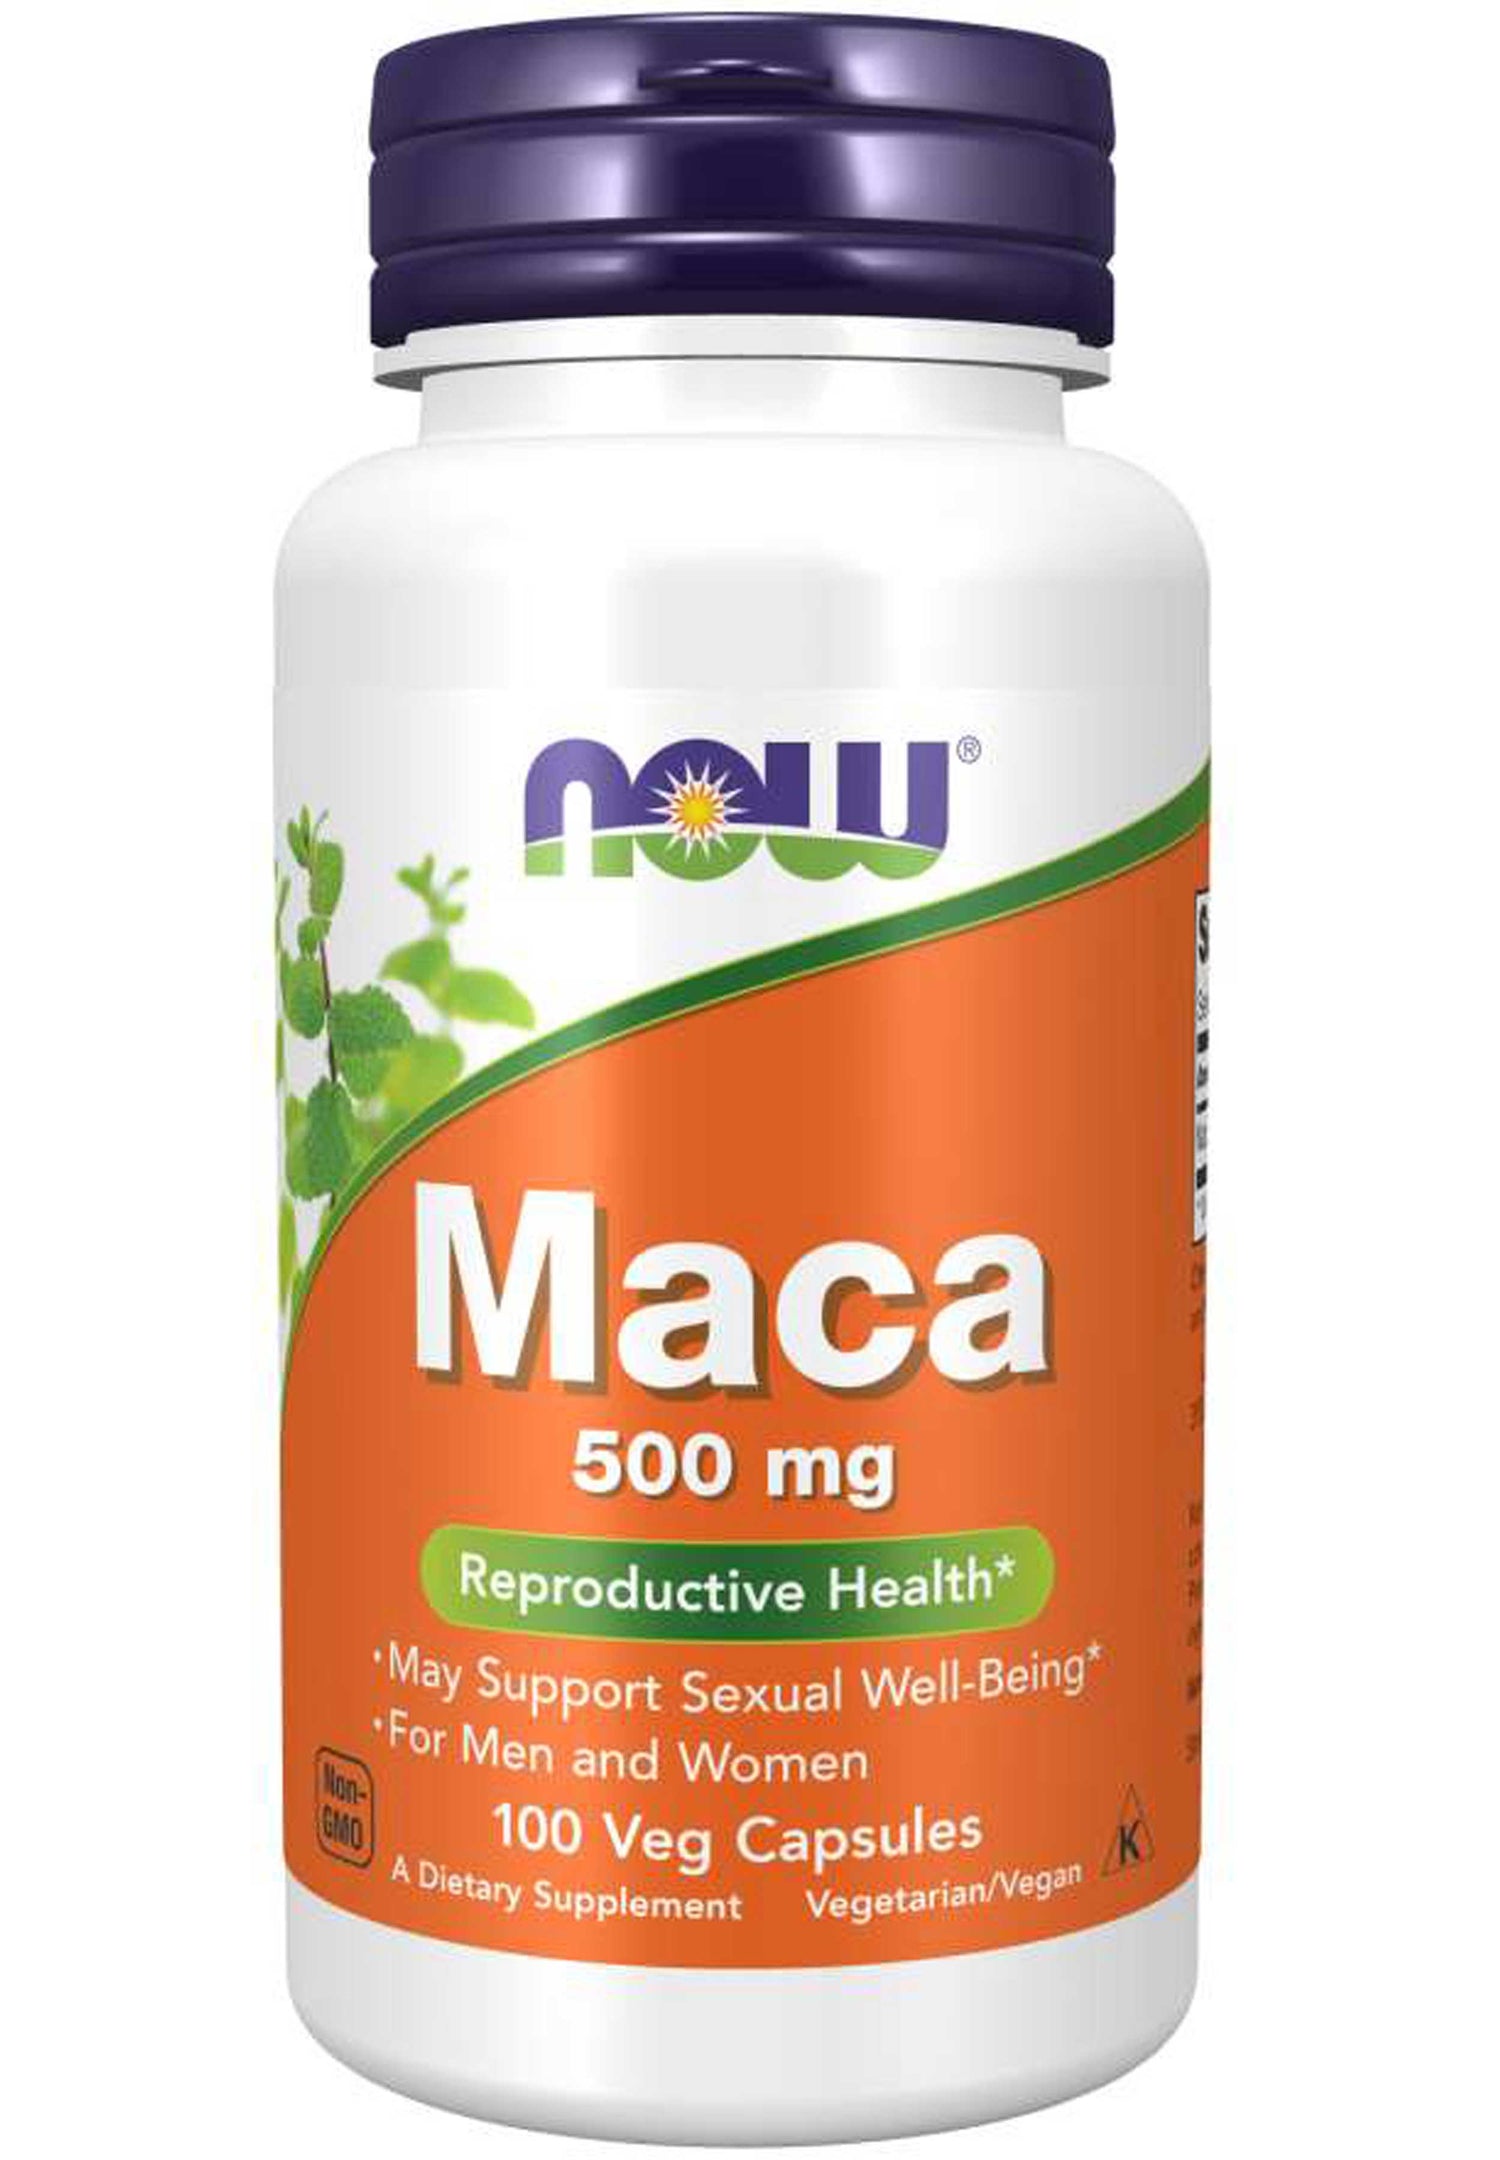 NOW Maca 500 mg – Supplement First